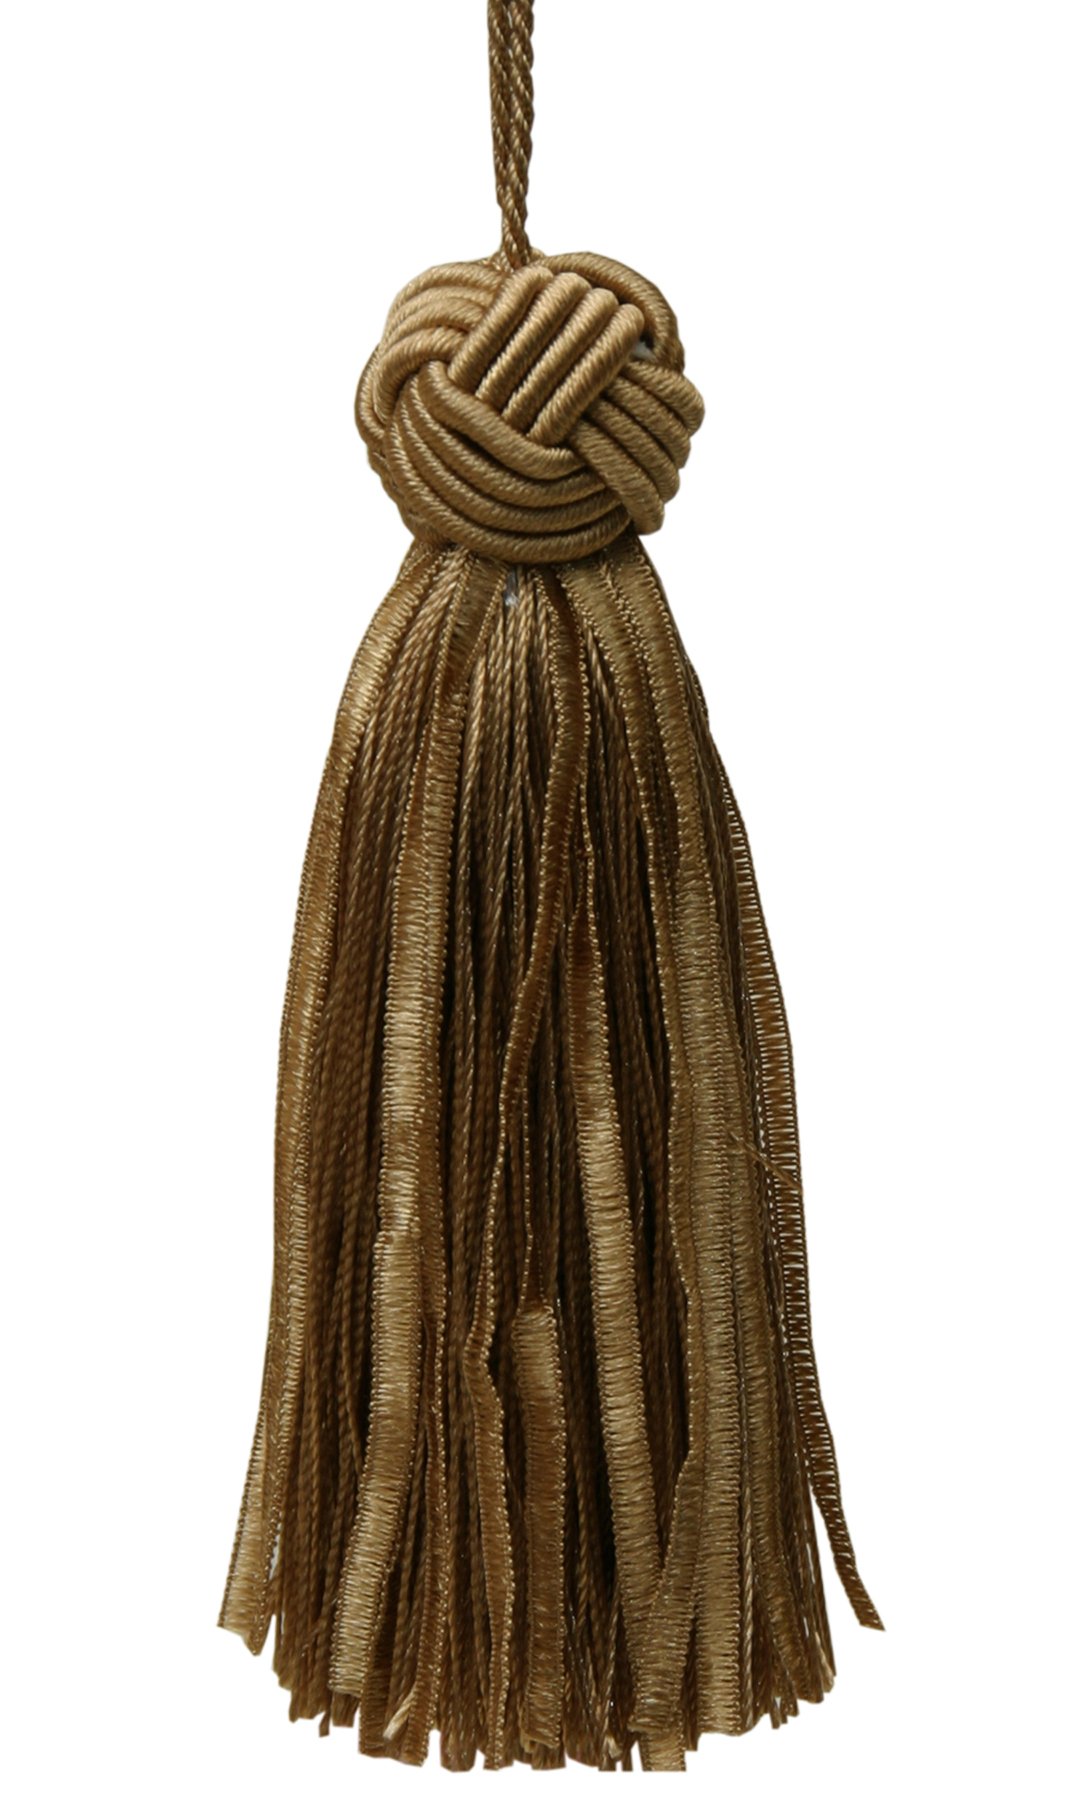 Turks Head Knot Tassel - Gold 10.5cm Pack of 5